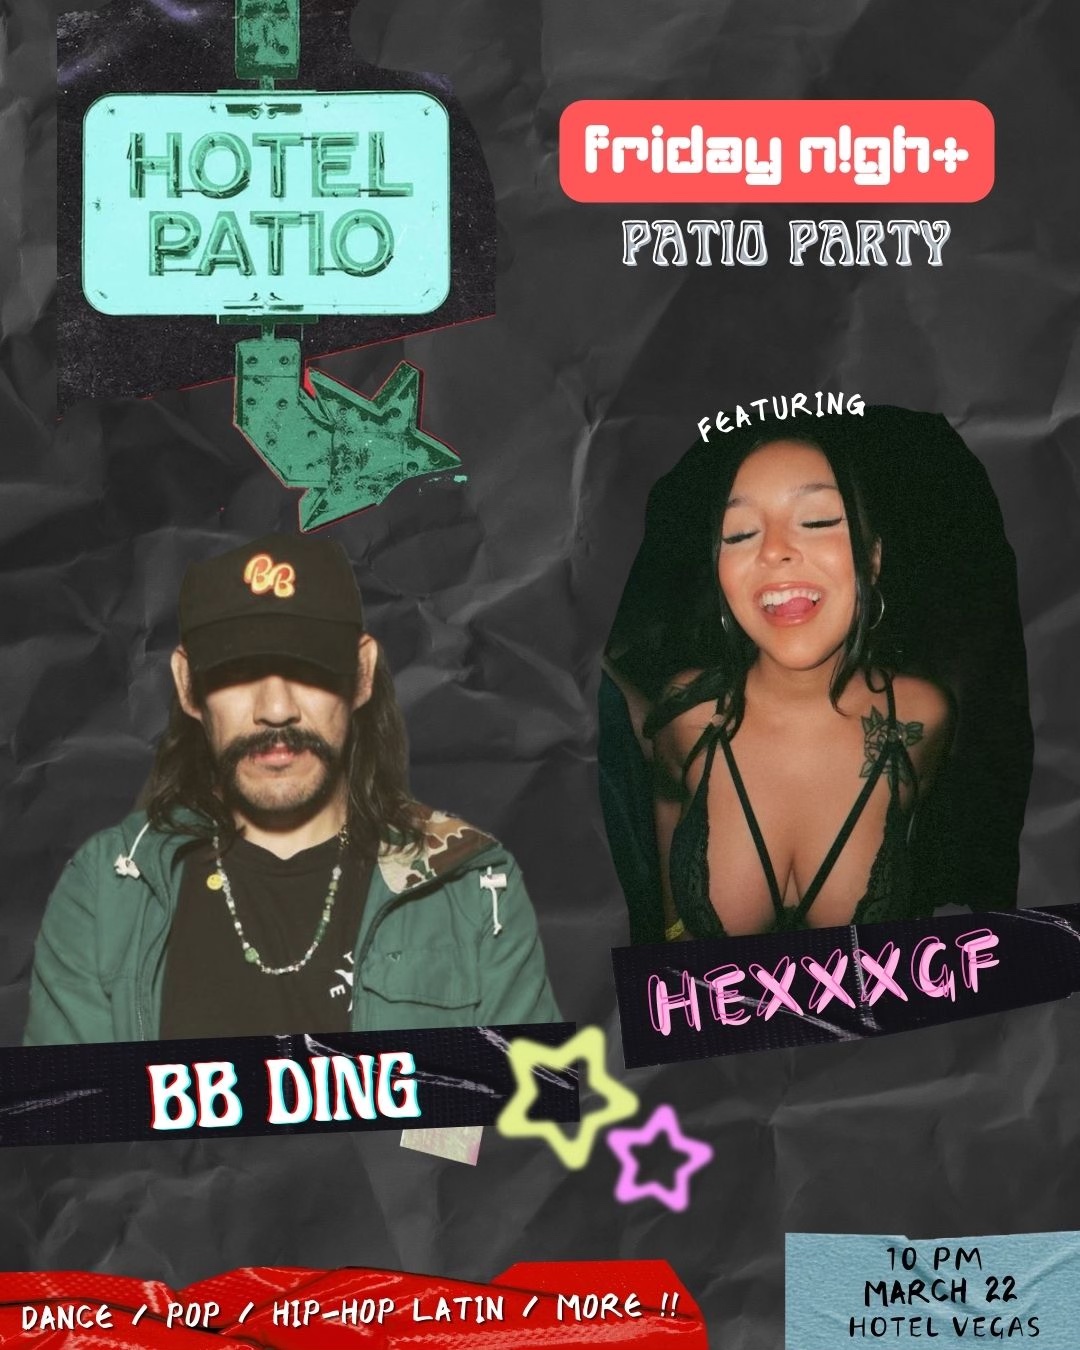 DJ bb ding + HEXXX GF on the Patio! @ Hotel Vegas